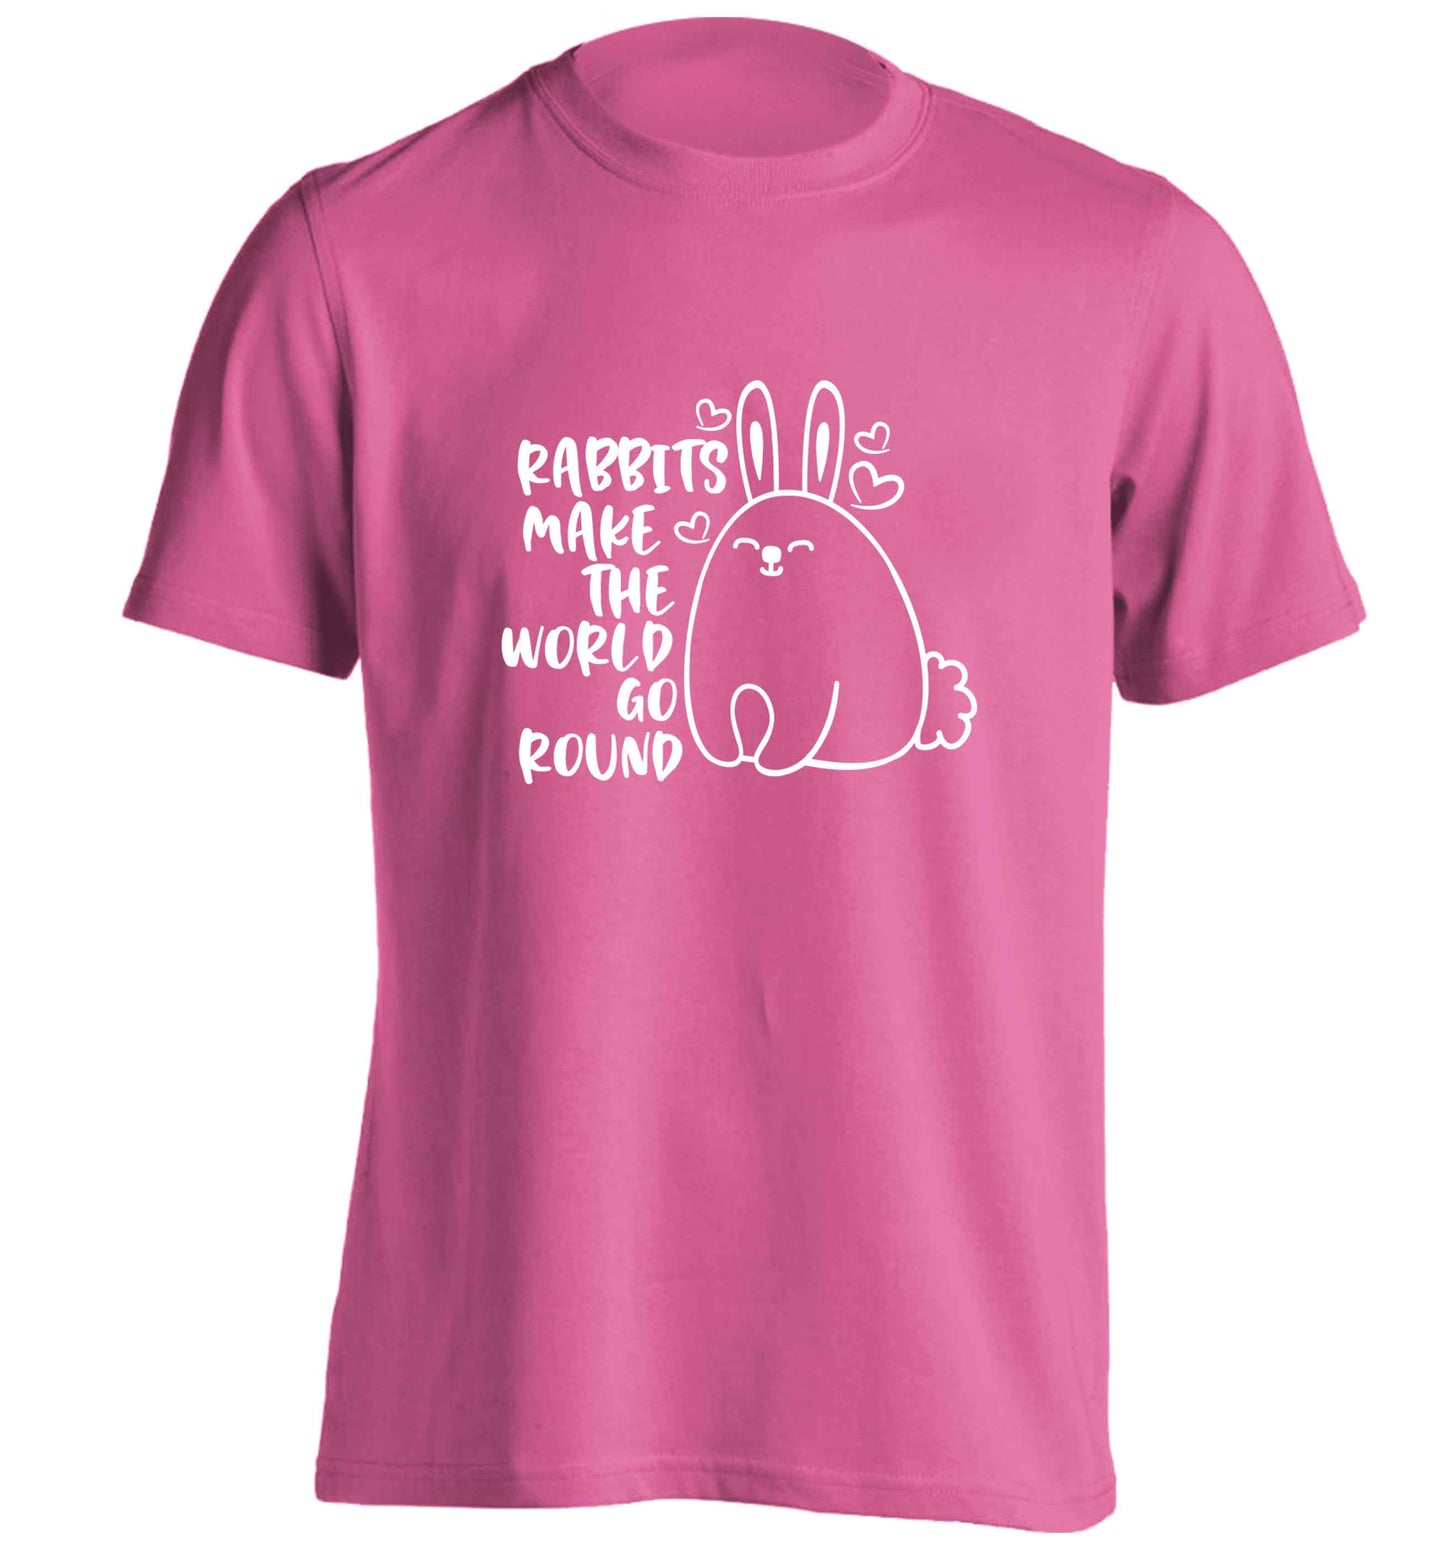 Rabbits make the world go round adults unisex pink Tshirt 2XL